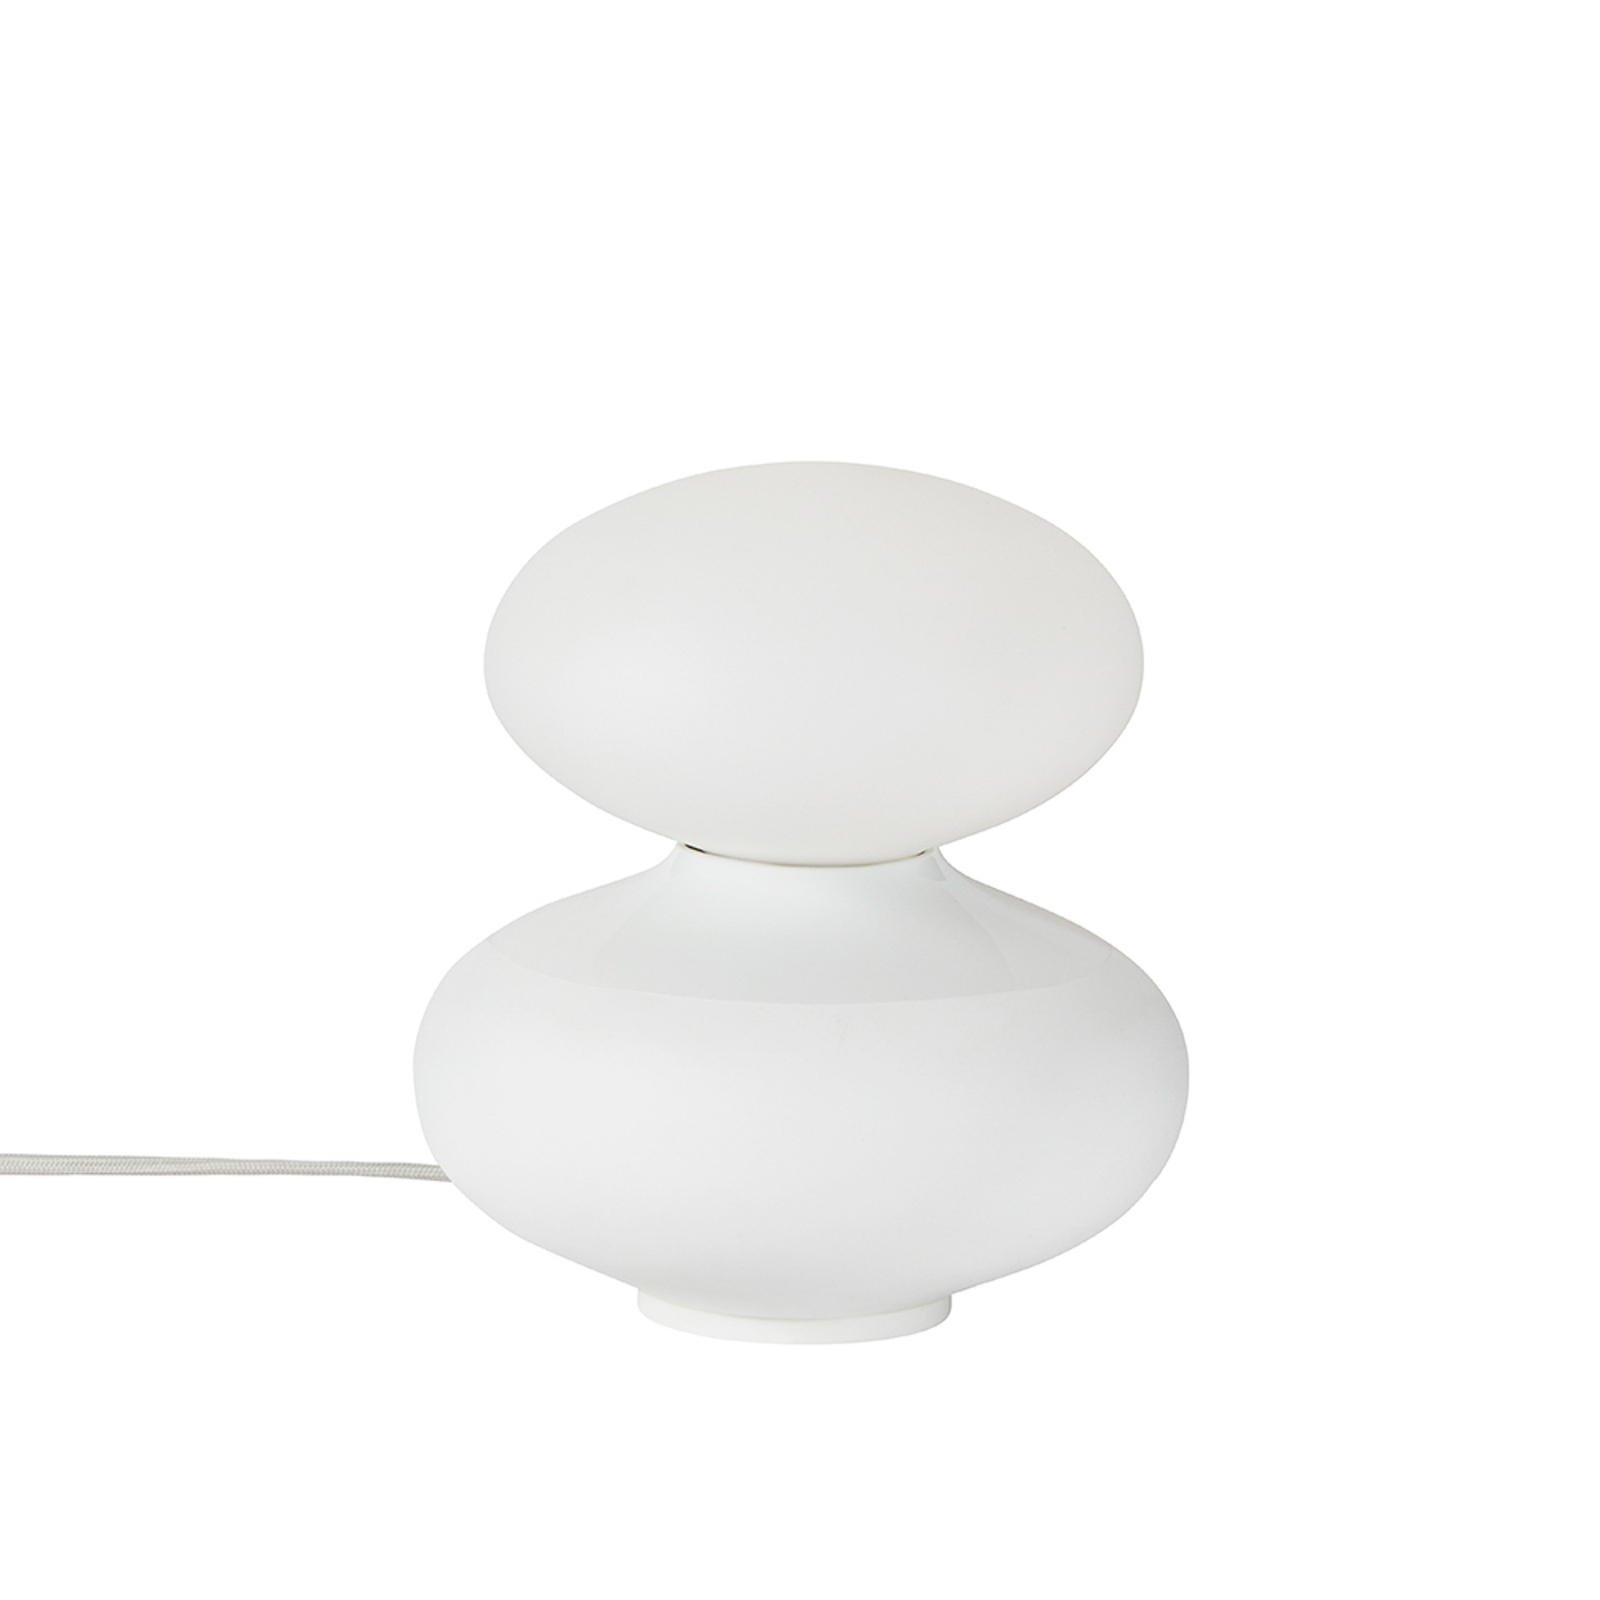 Tala table lamp Reflection Oval, design David Weeks